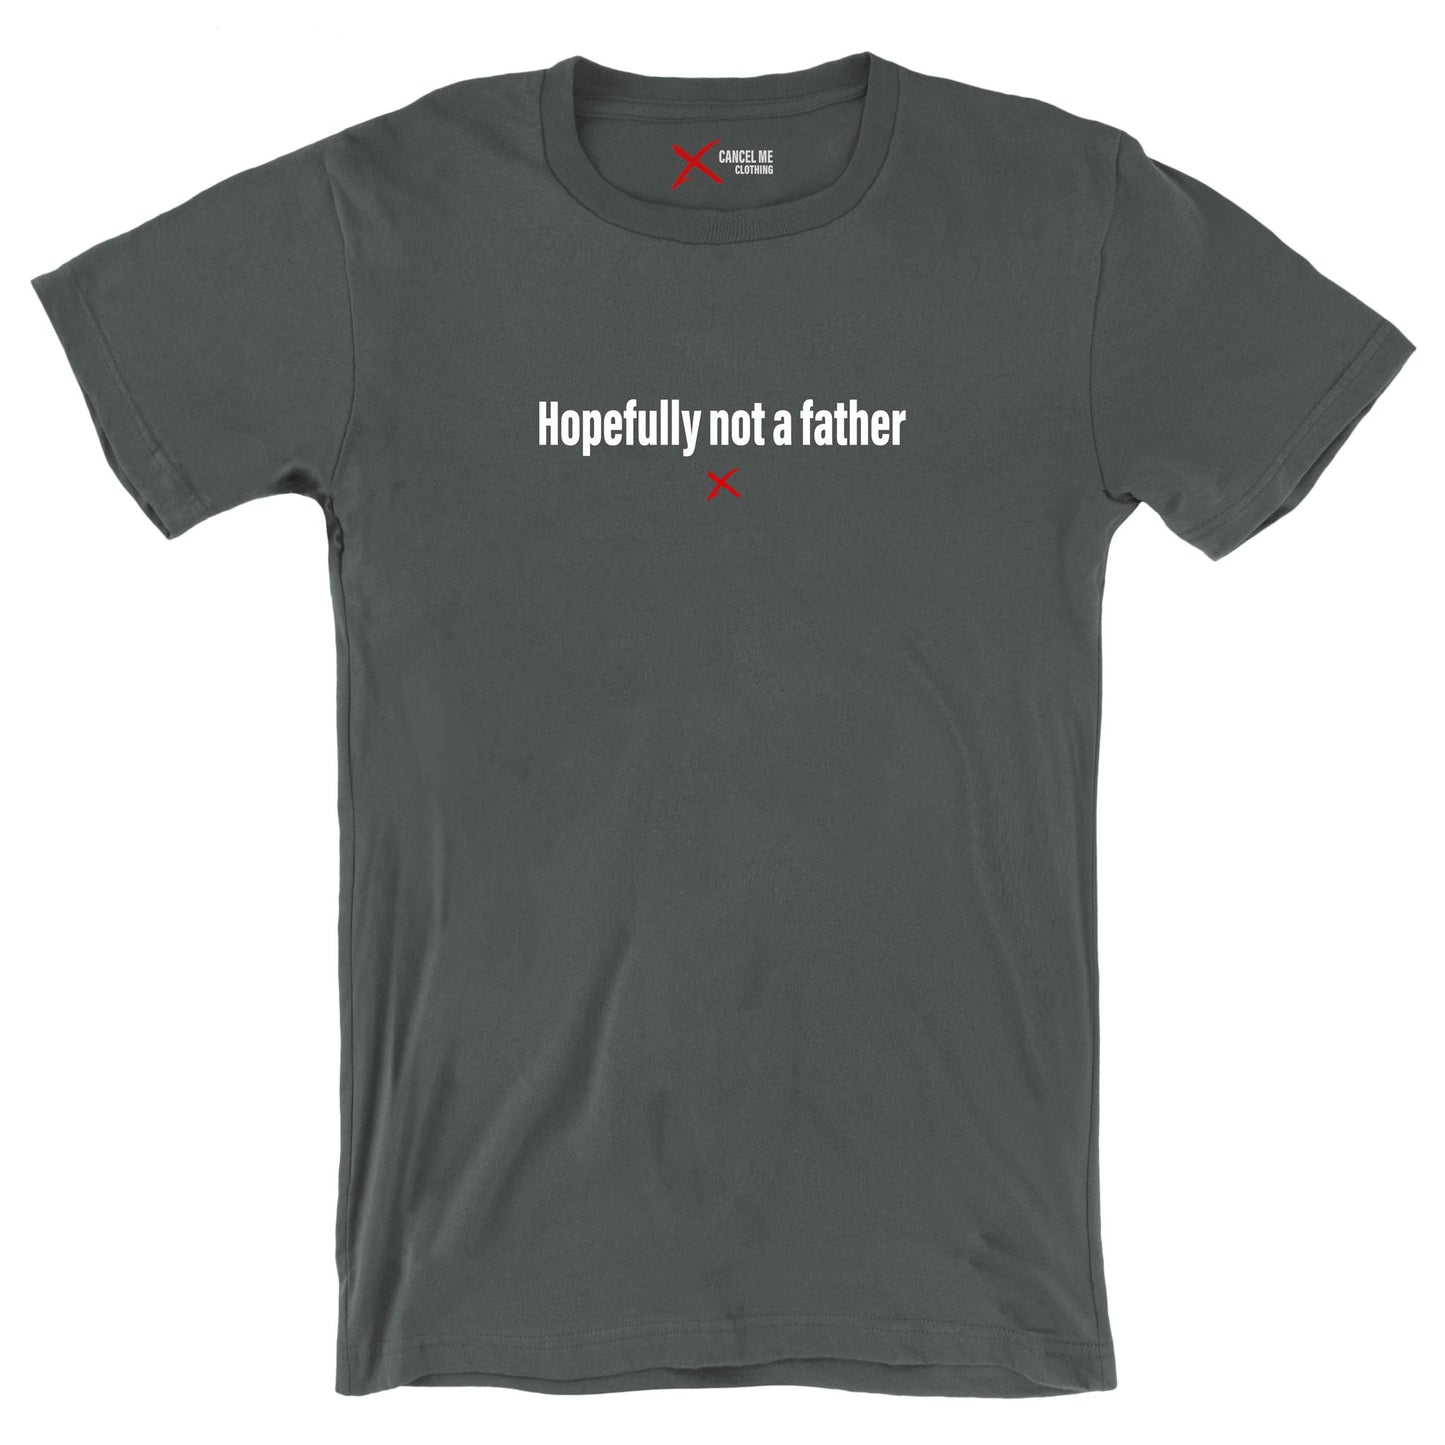 Hopefully not a father - Shirt